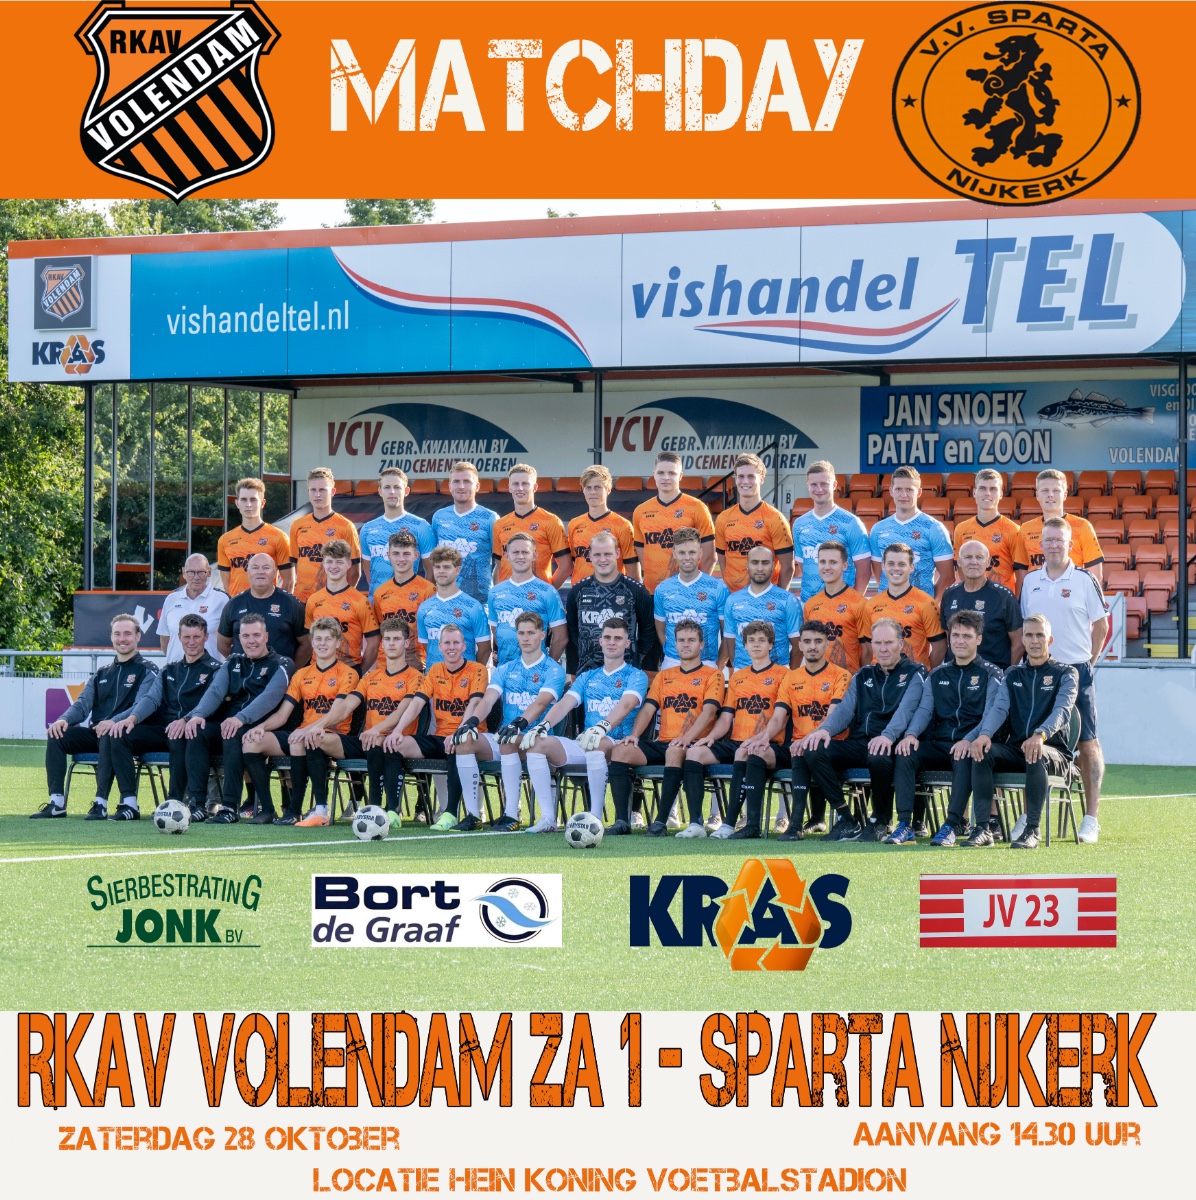 Rkav Volendam - Sparta Nijkerk